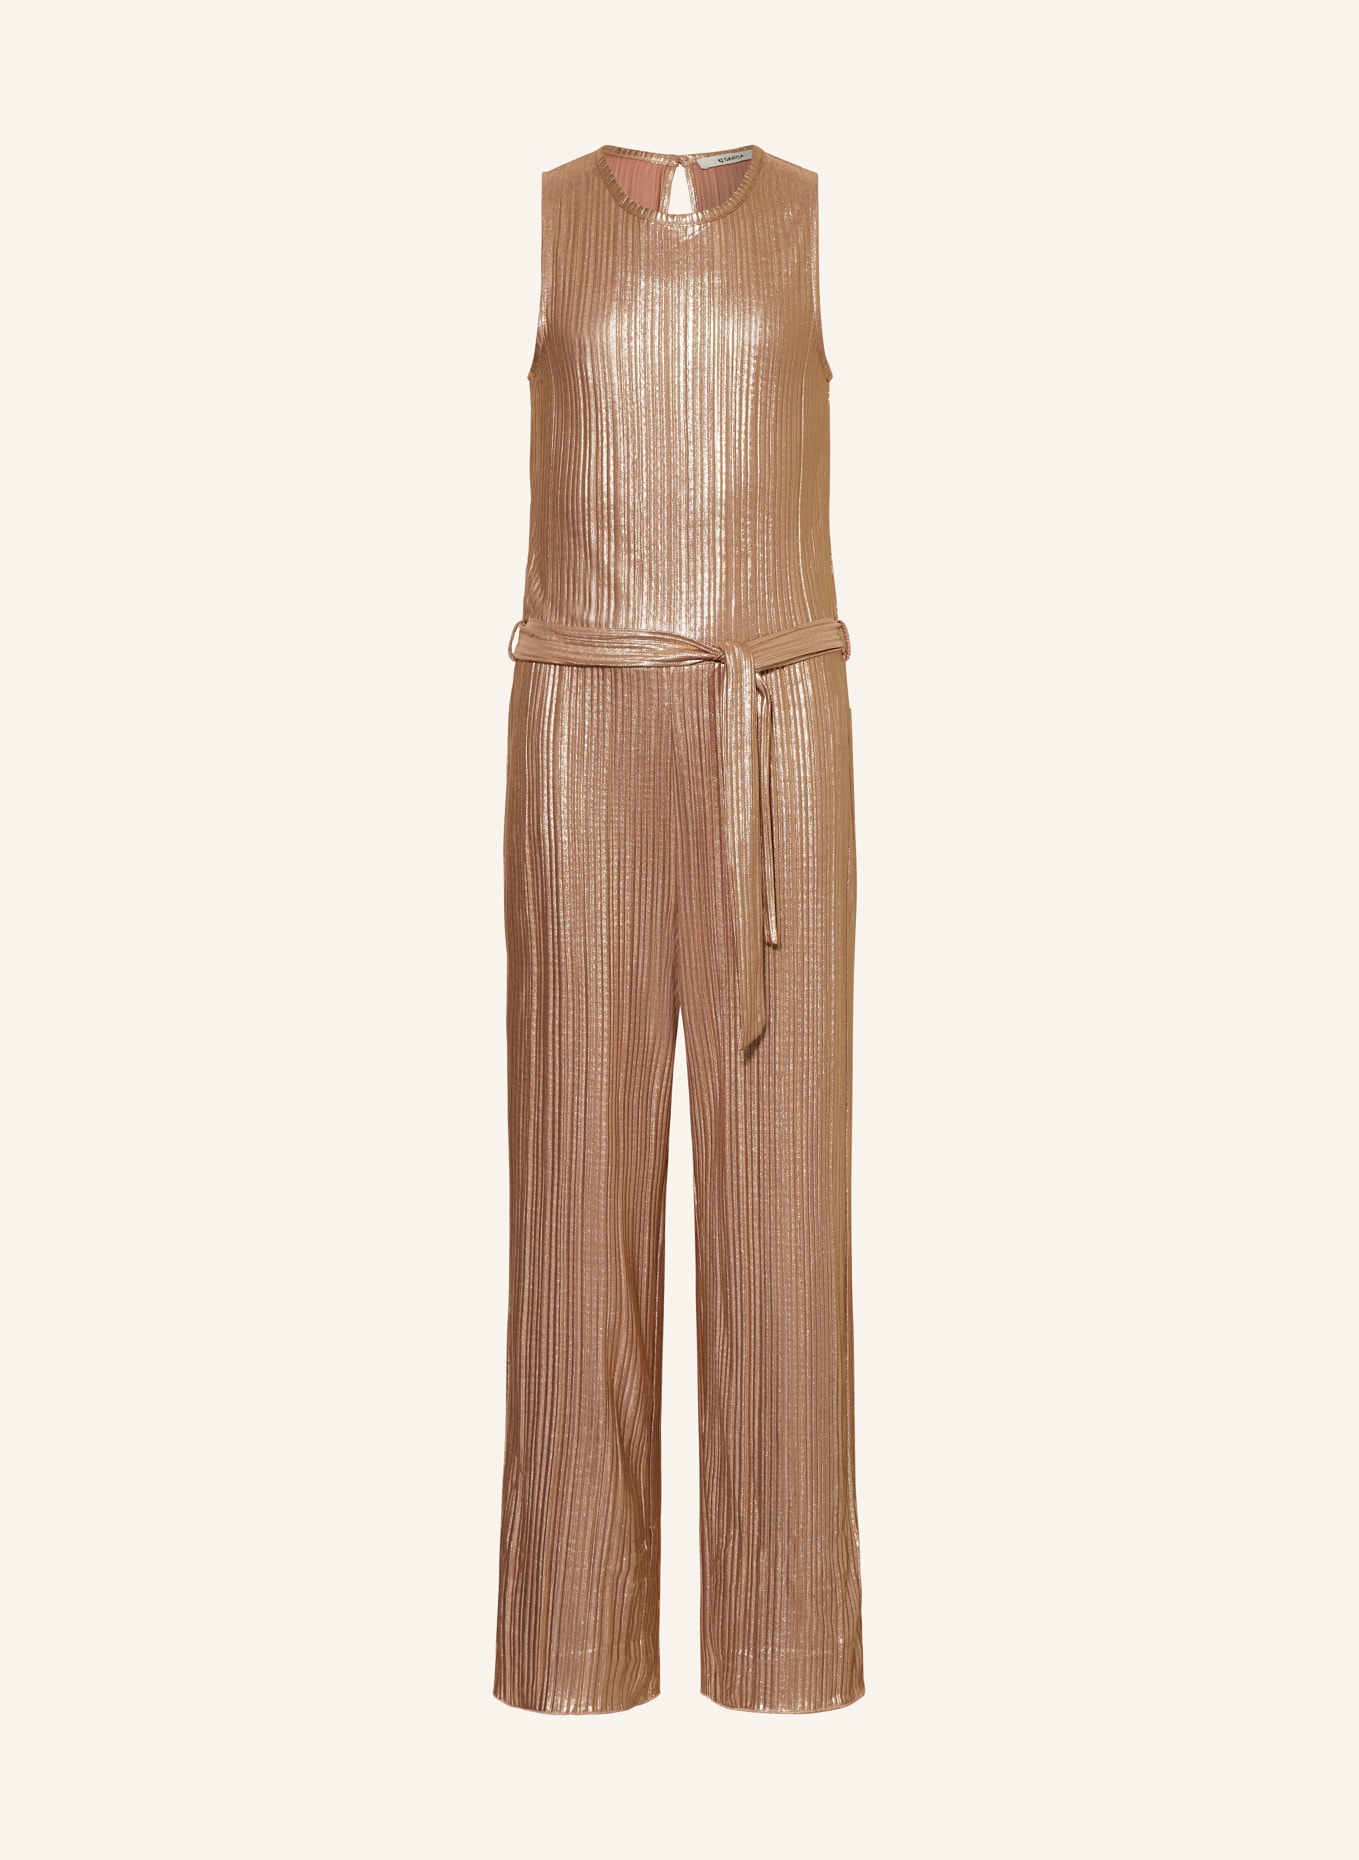 GARCIA Jumpsuit mit Plissees, Farbe: GOLD (Bild 1)